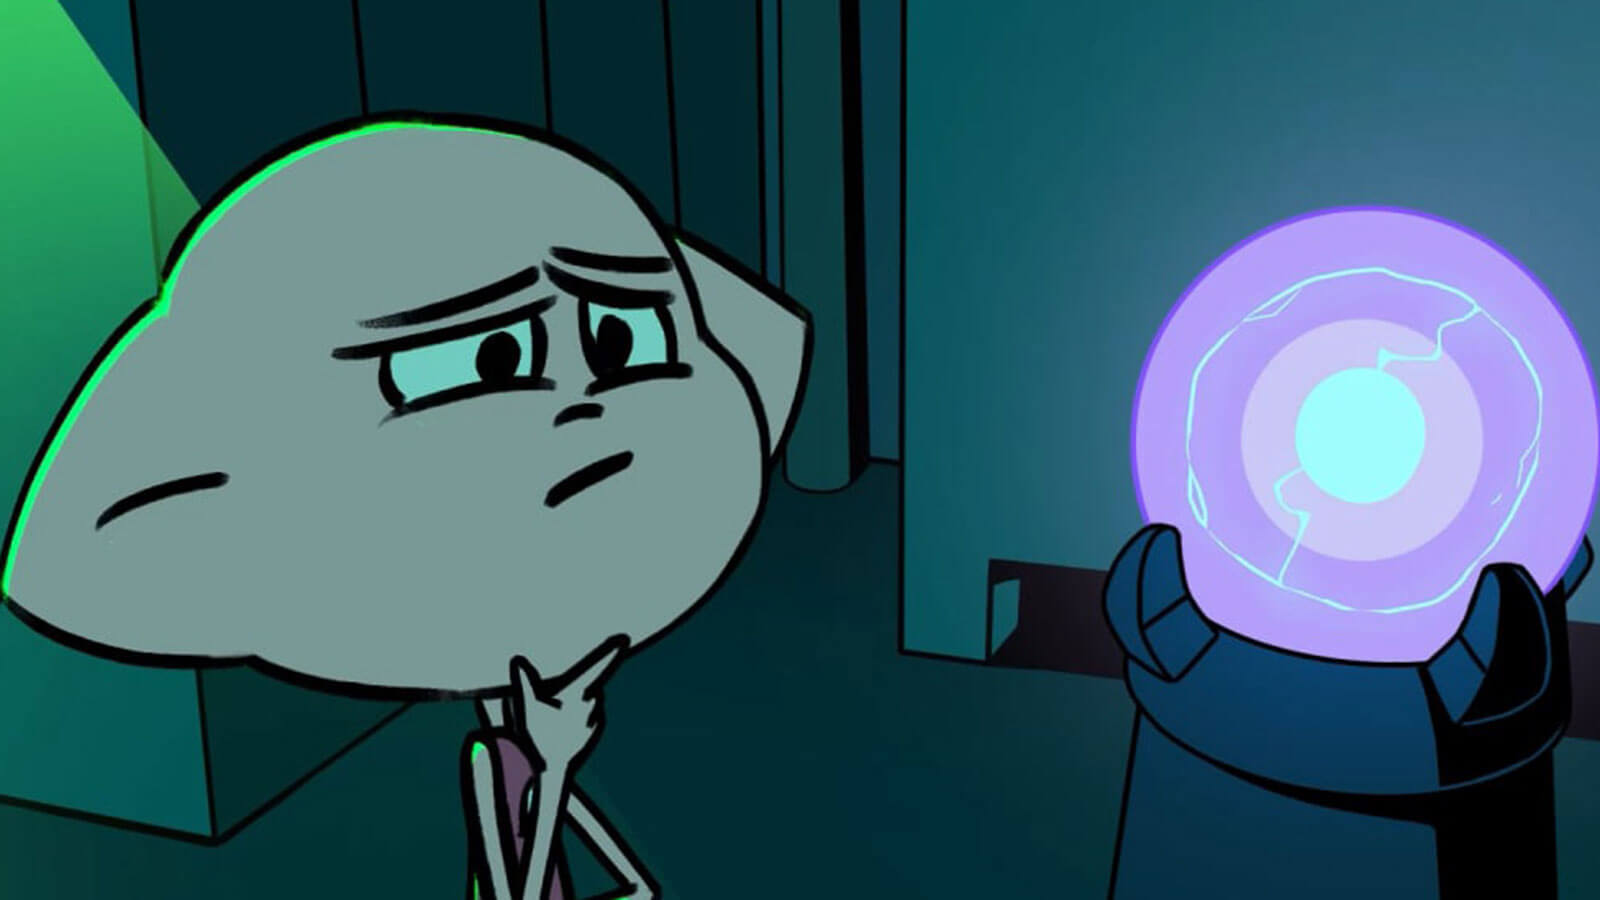 Small alien character gazes into purple orb